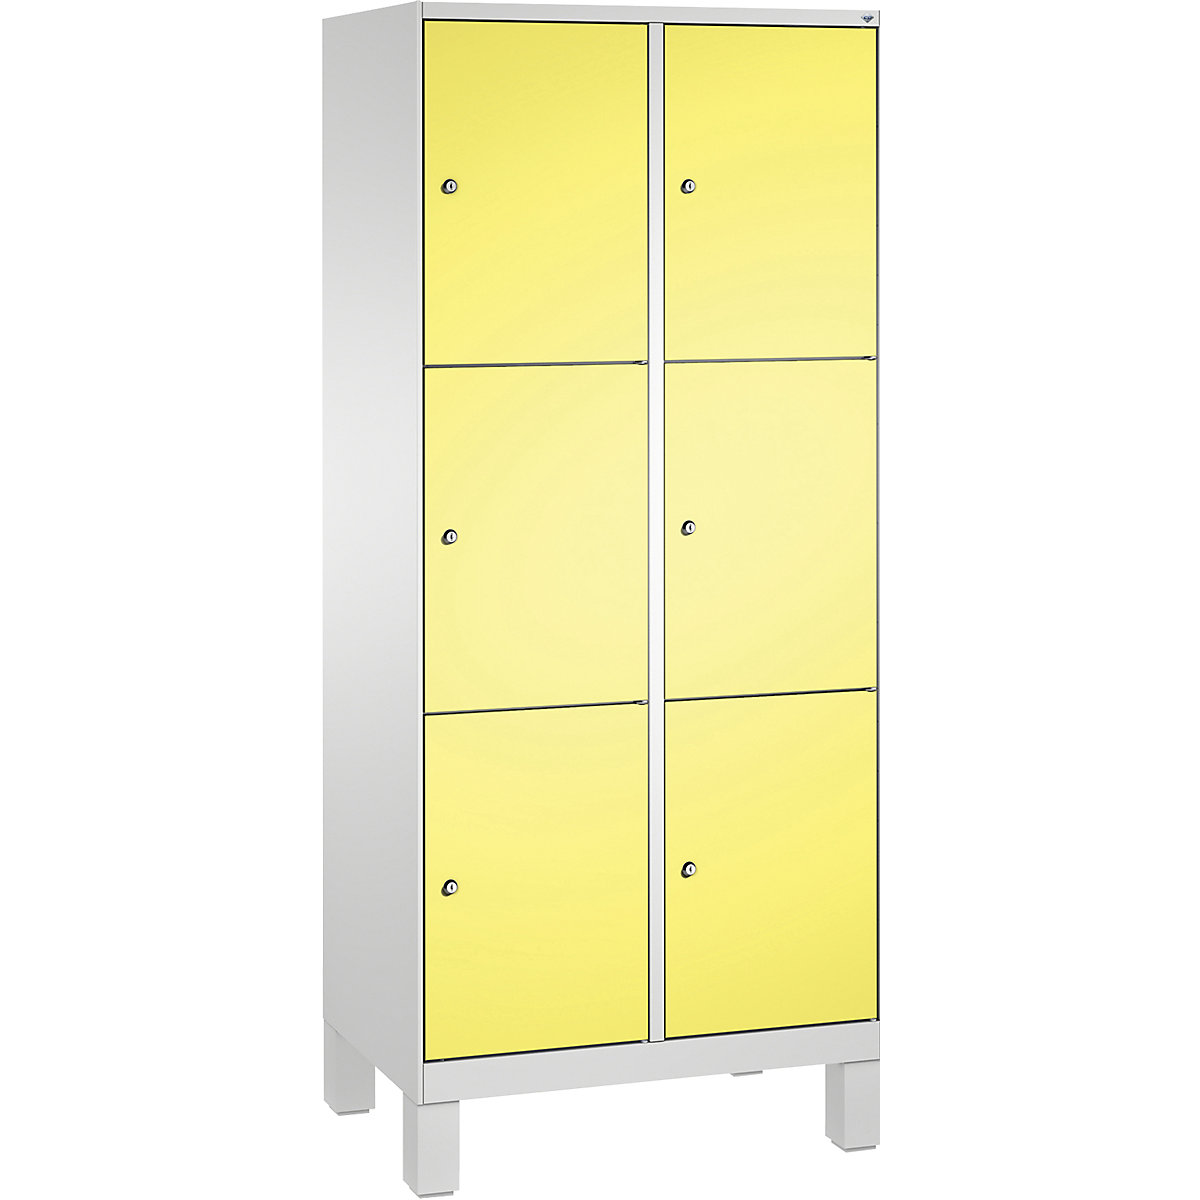 EVOLO locker unit, with feet – C+P, 2 compartments, 3 shelf compartments each, compartment width 400 mm, light grey / sulphur yellow